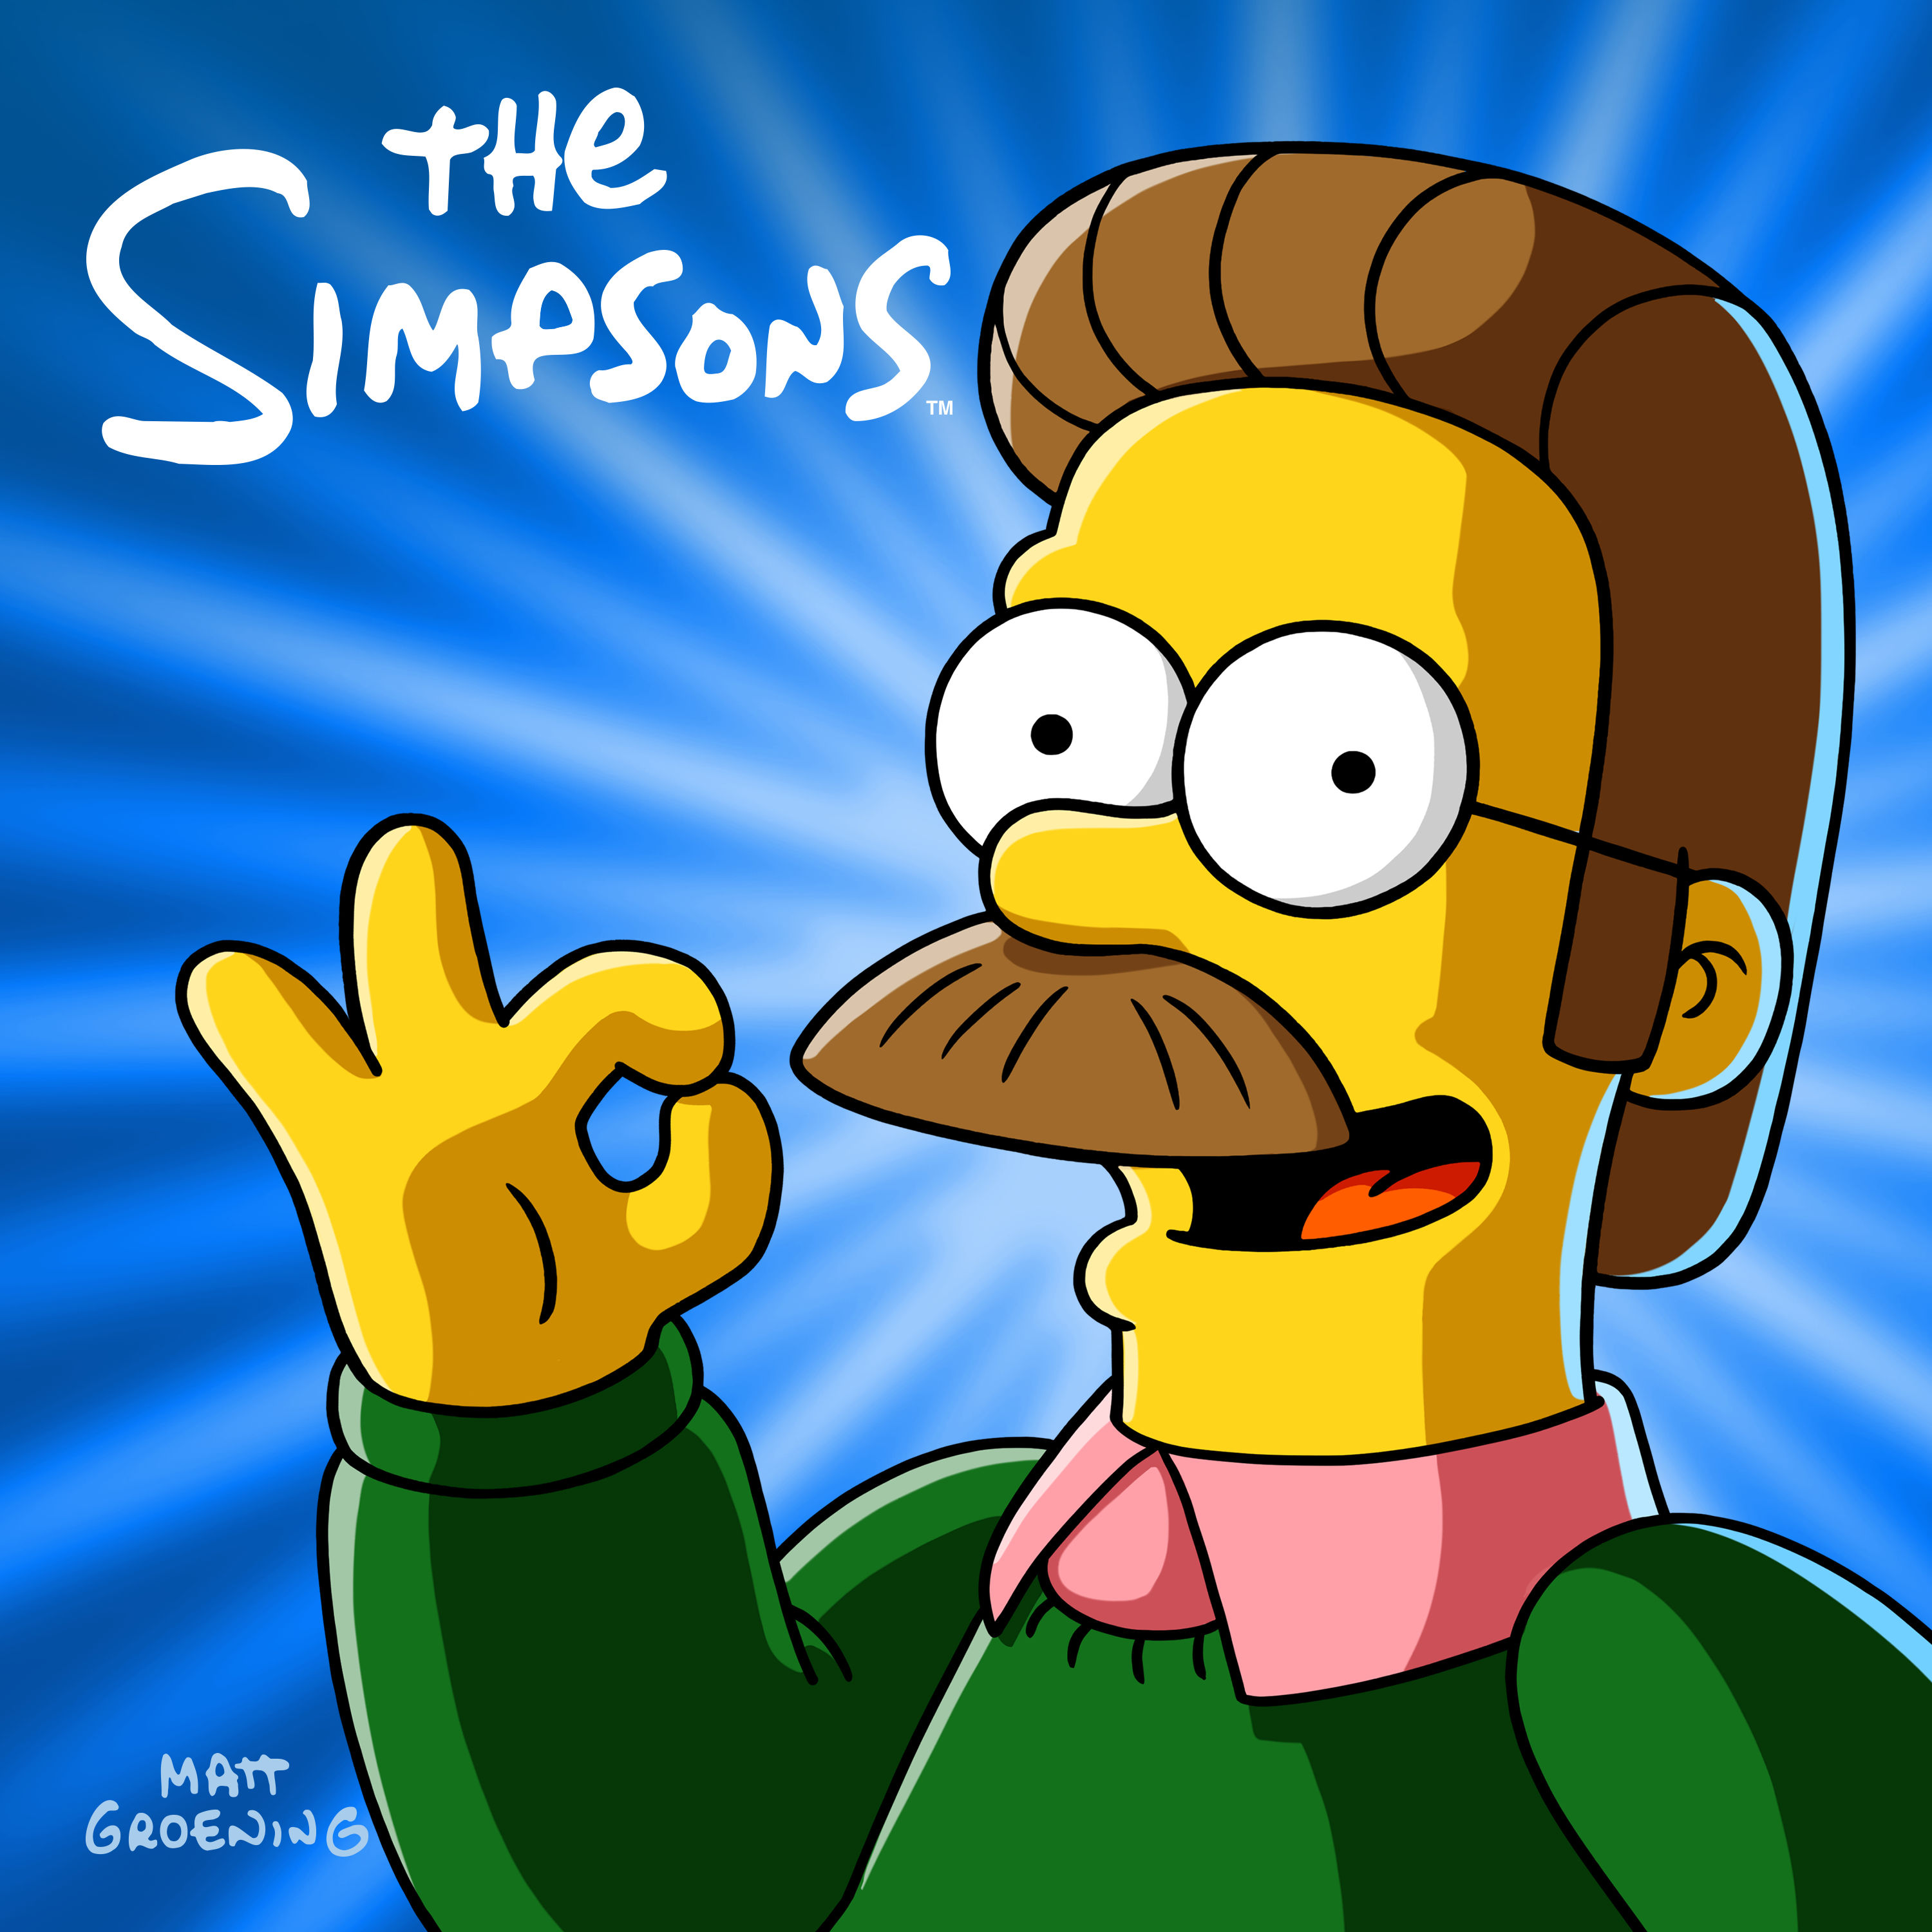 Category:Sad episodes, Simpsons Wiki